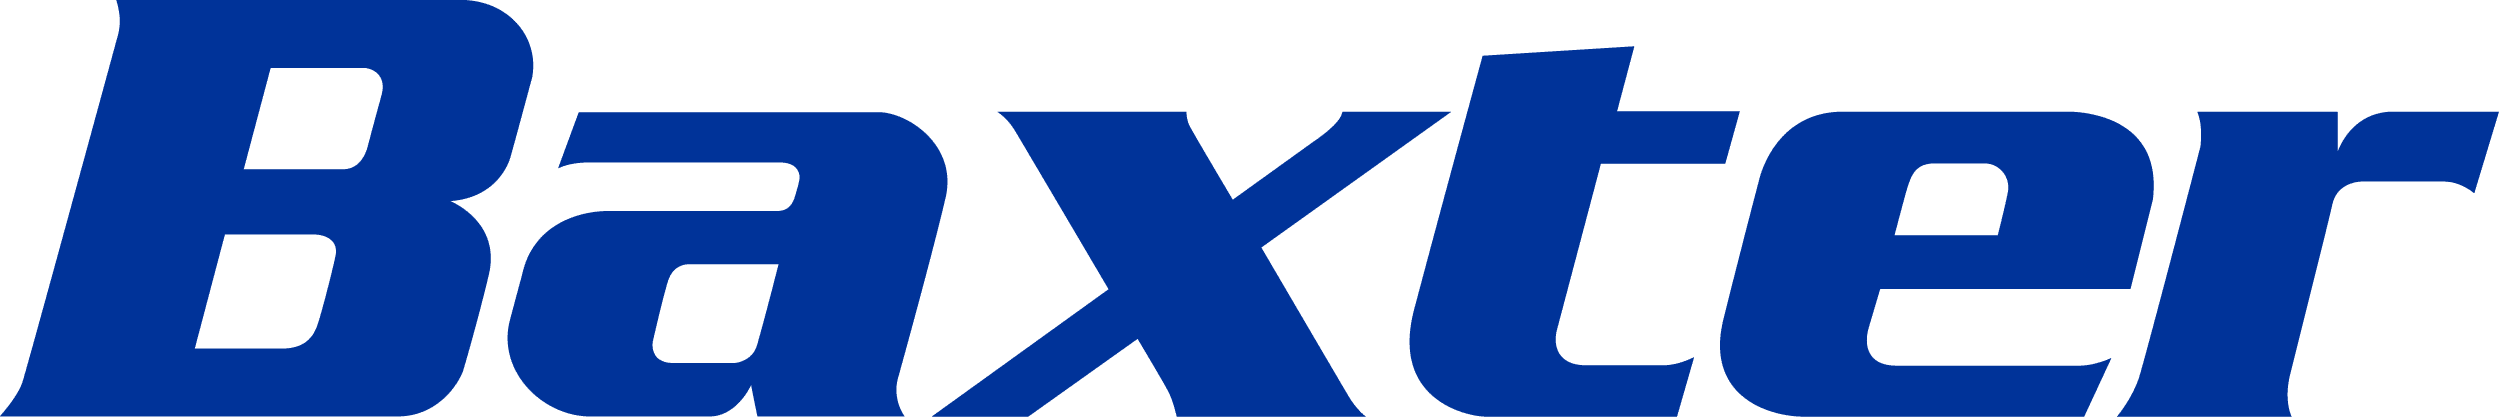 Baxter_logo